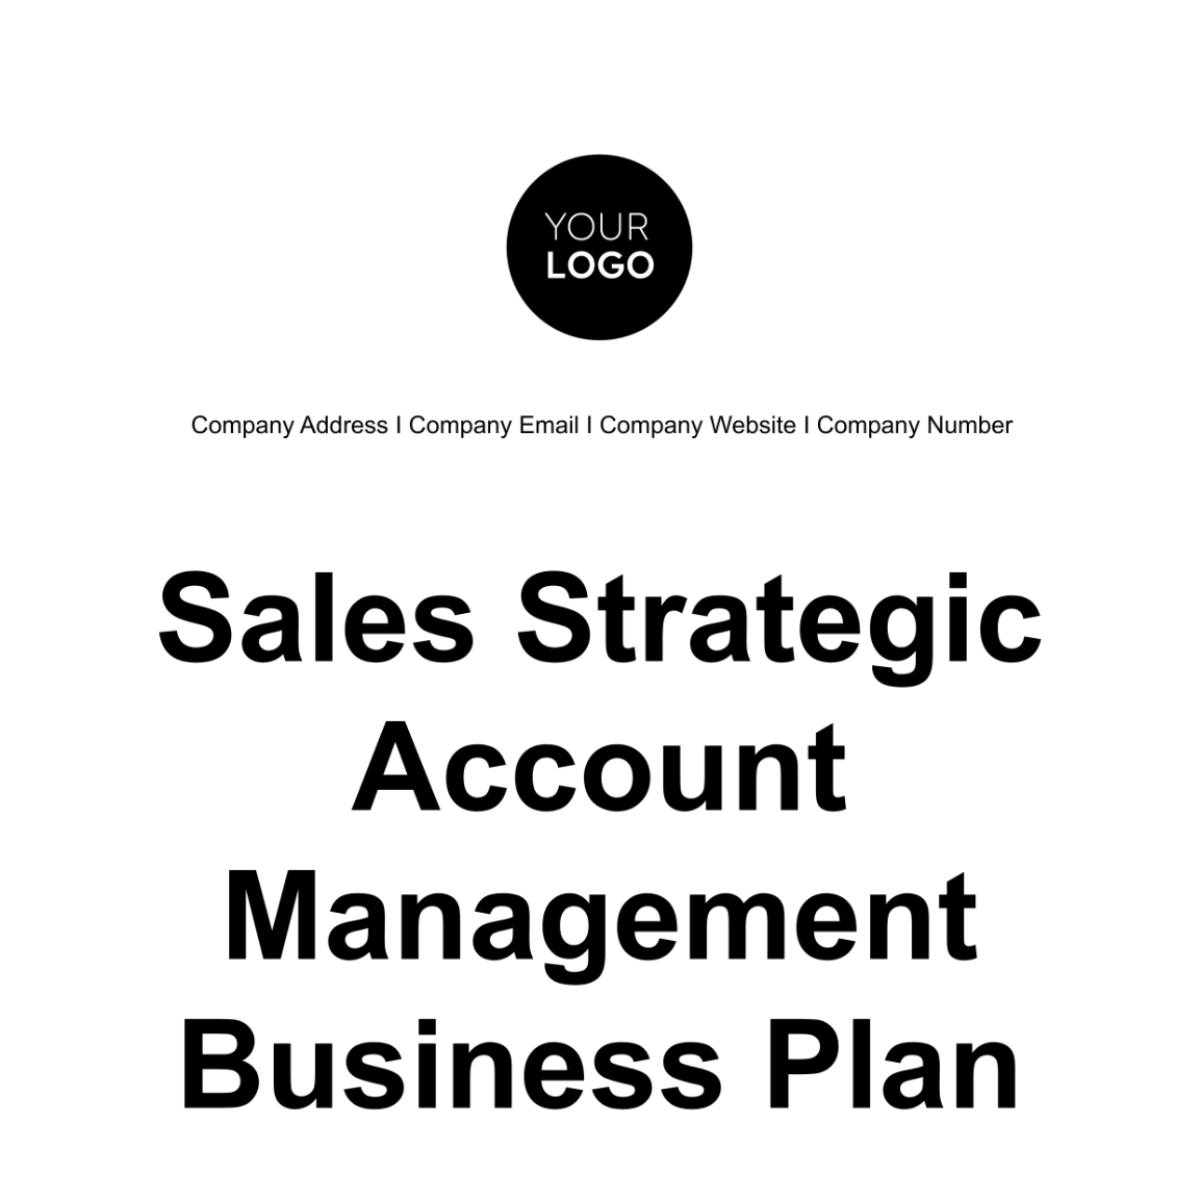 Sales Strategic Account Management Business Plan Template